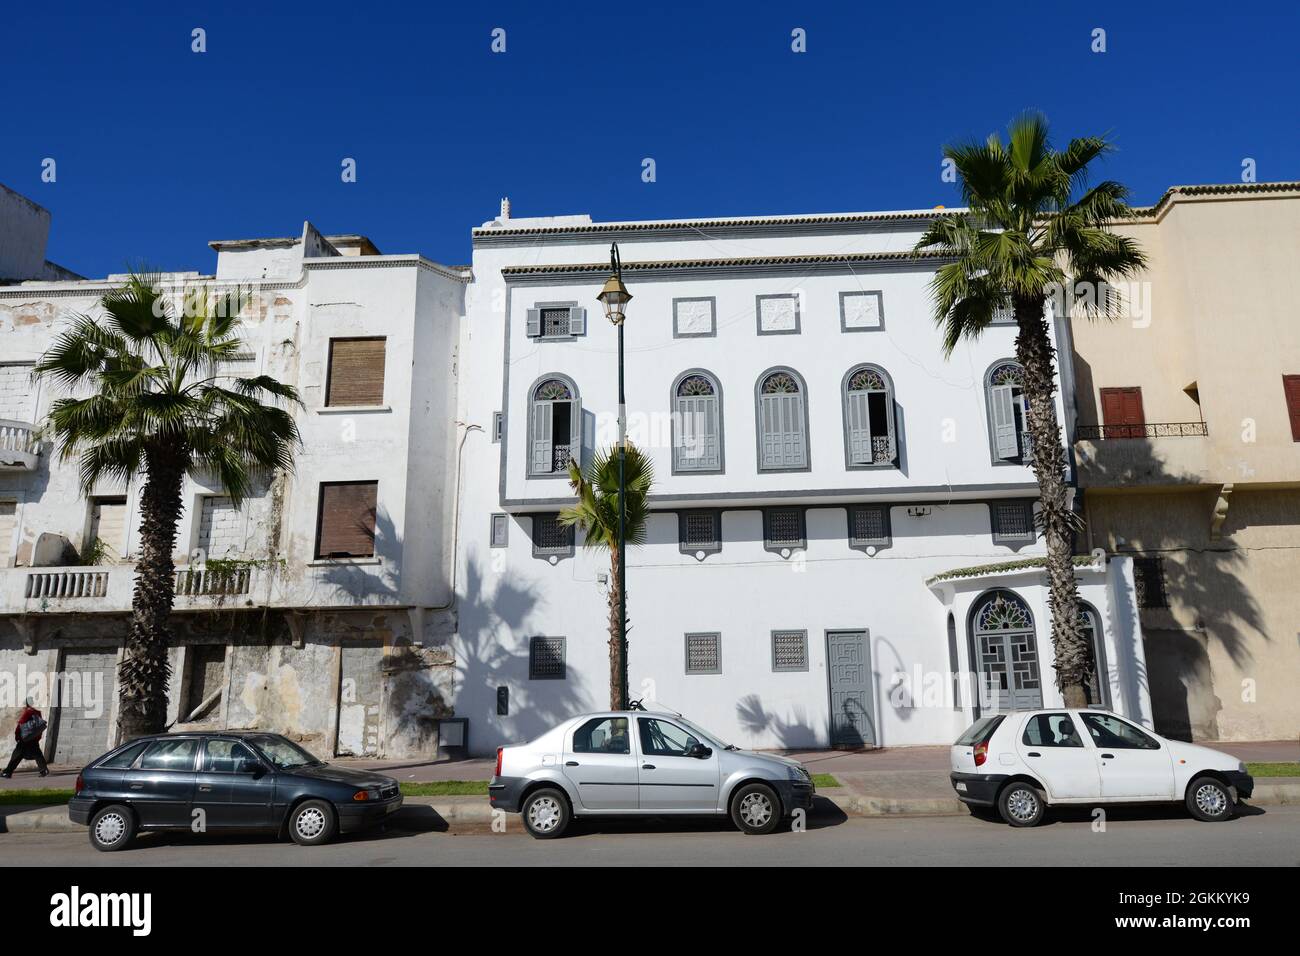 Wunderschöne alte Gebäude in Rabat, Marokko. Stockfoto